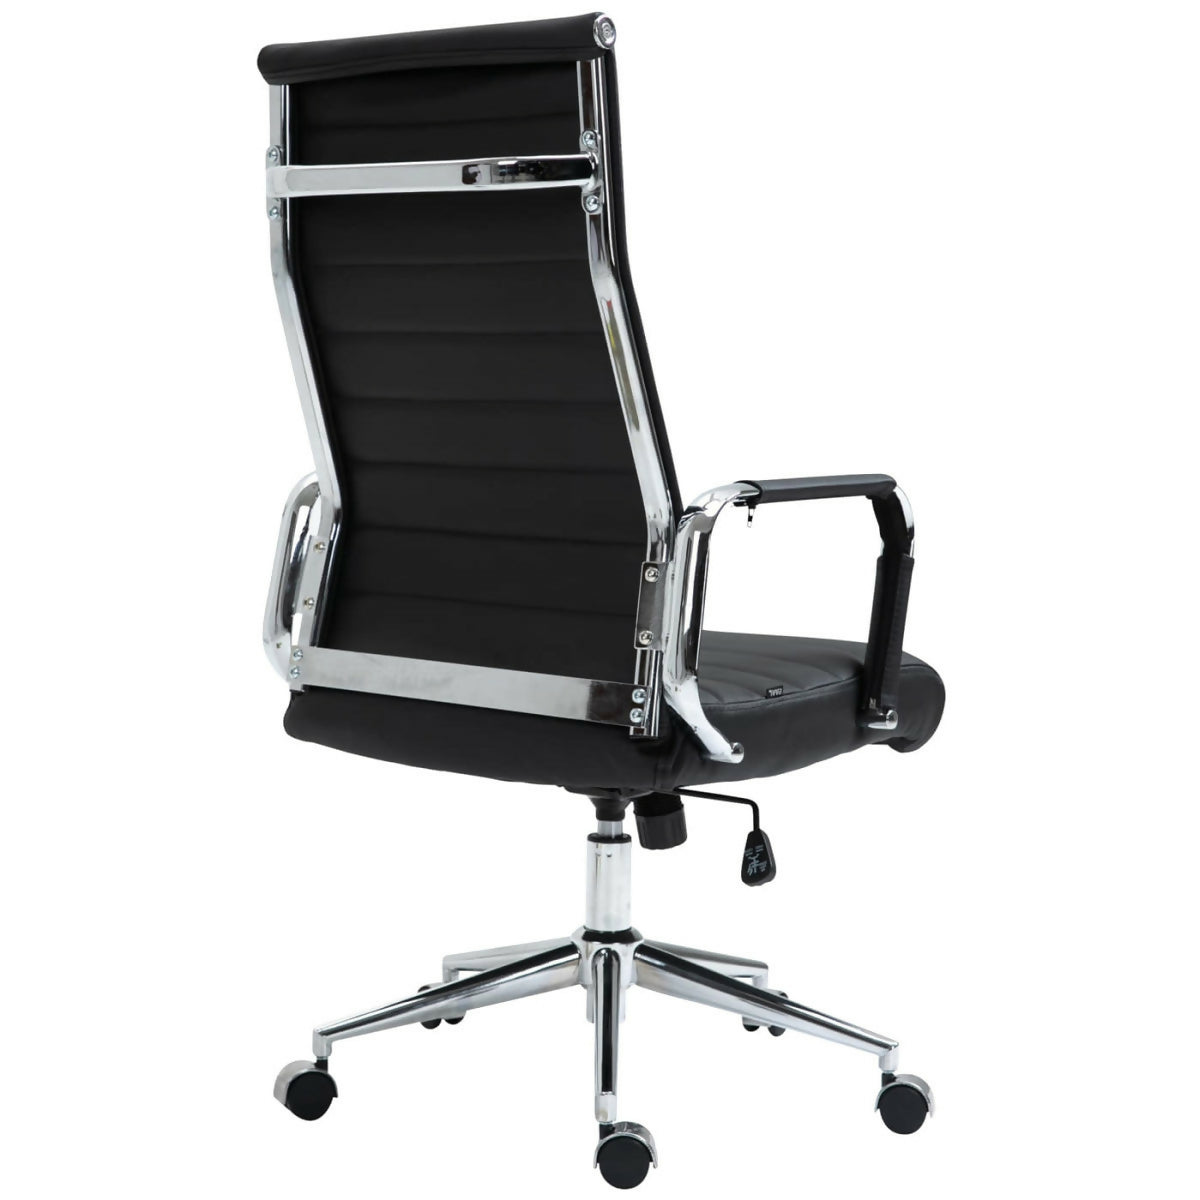 Kolumbus office chair - Black